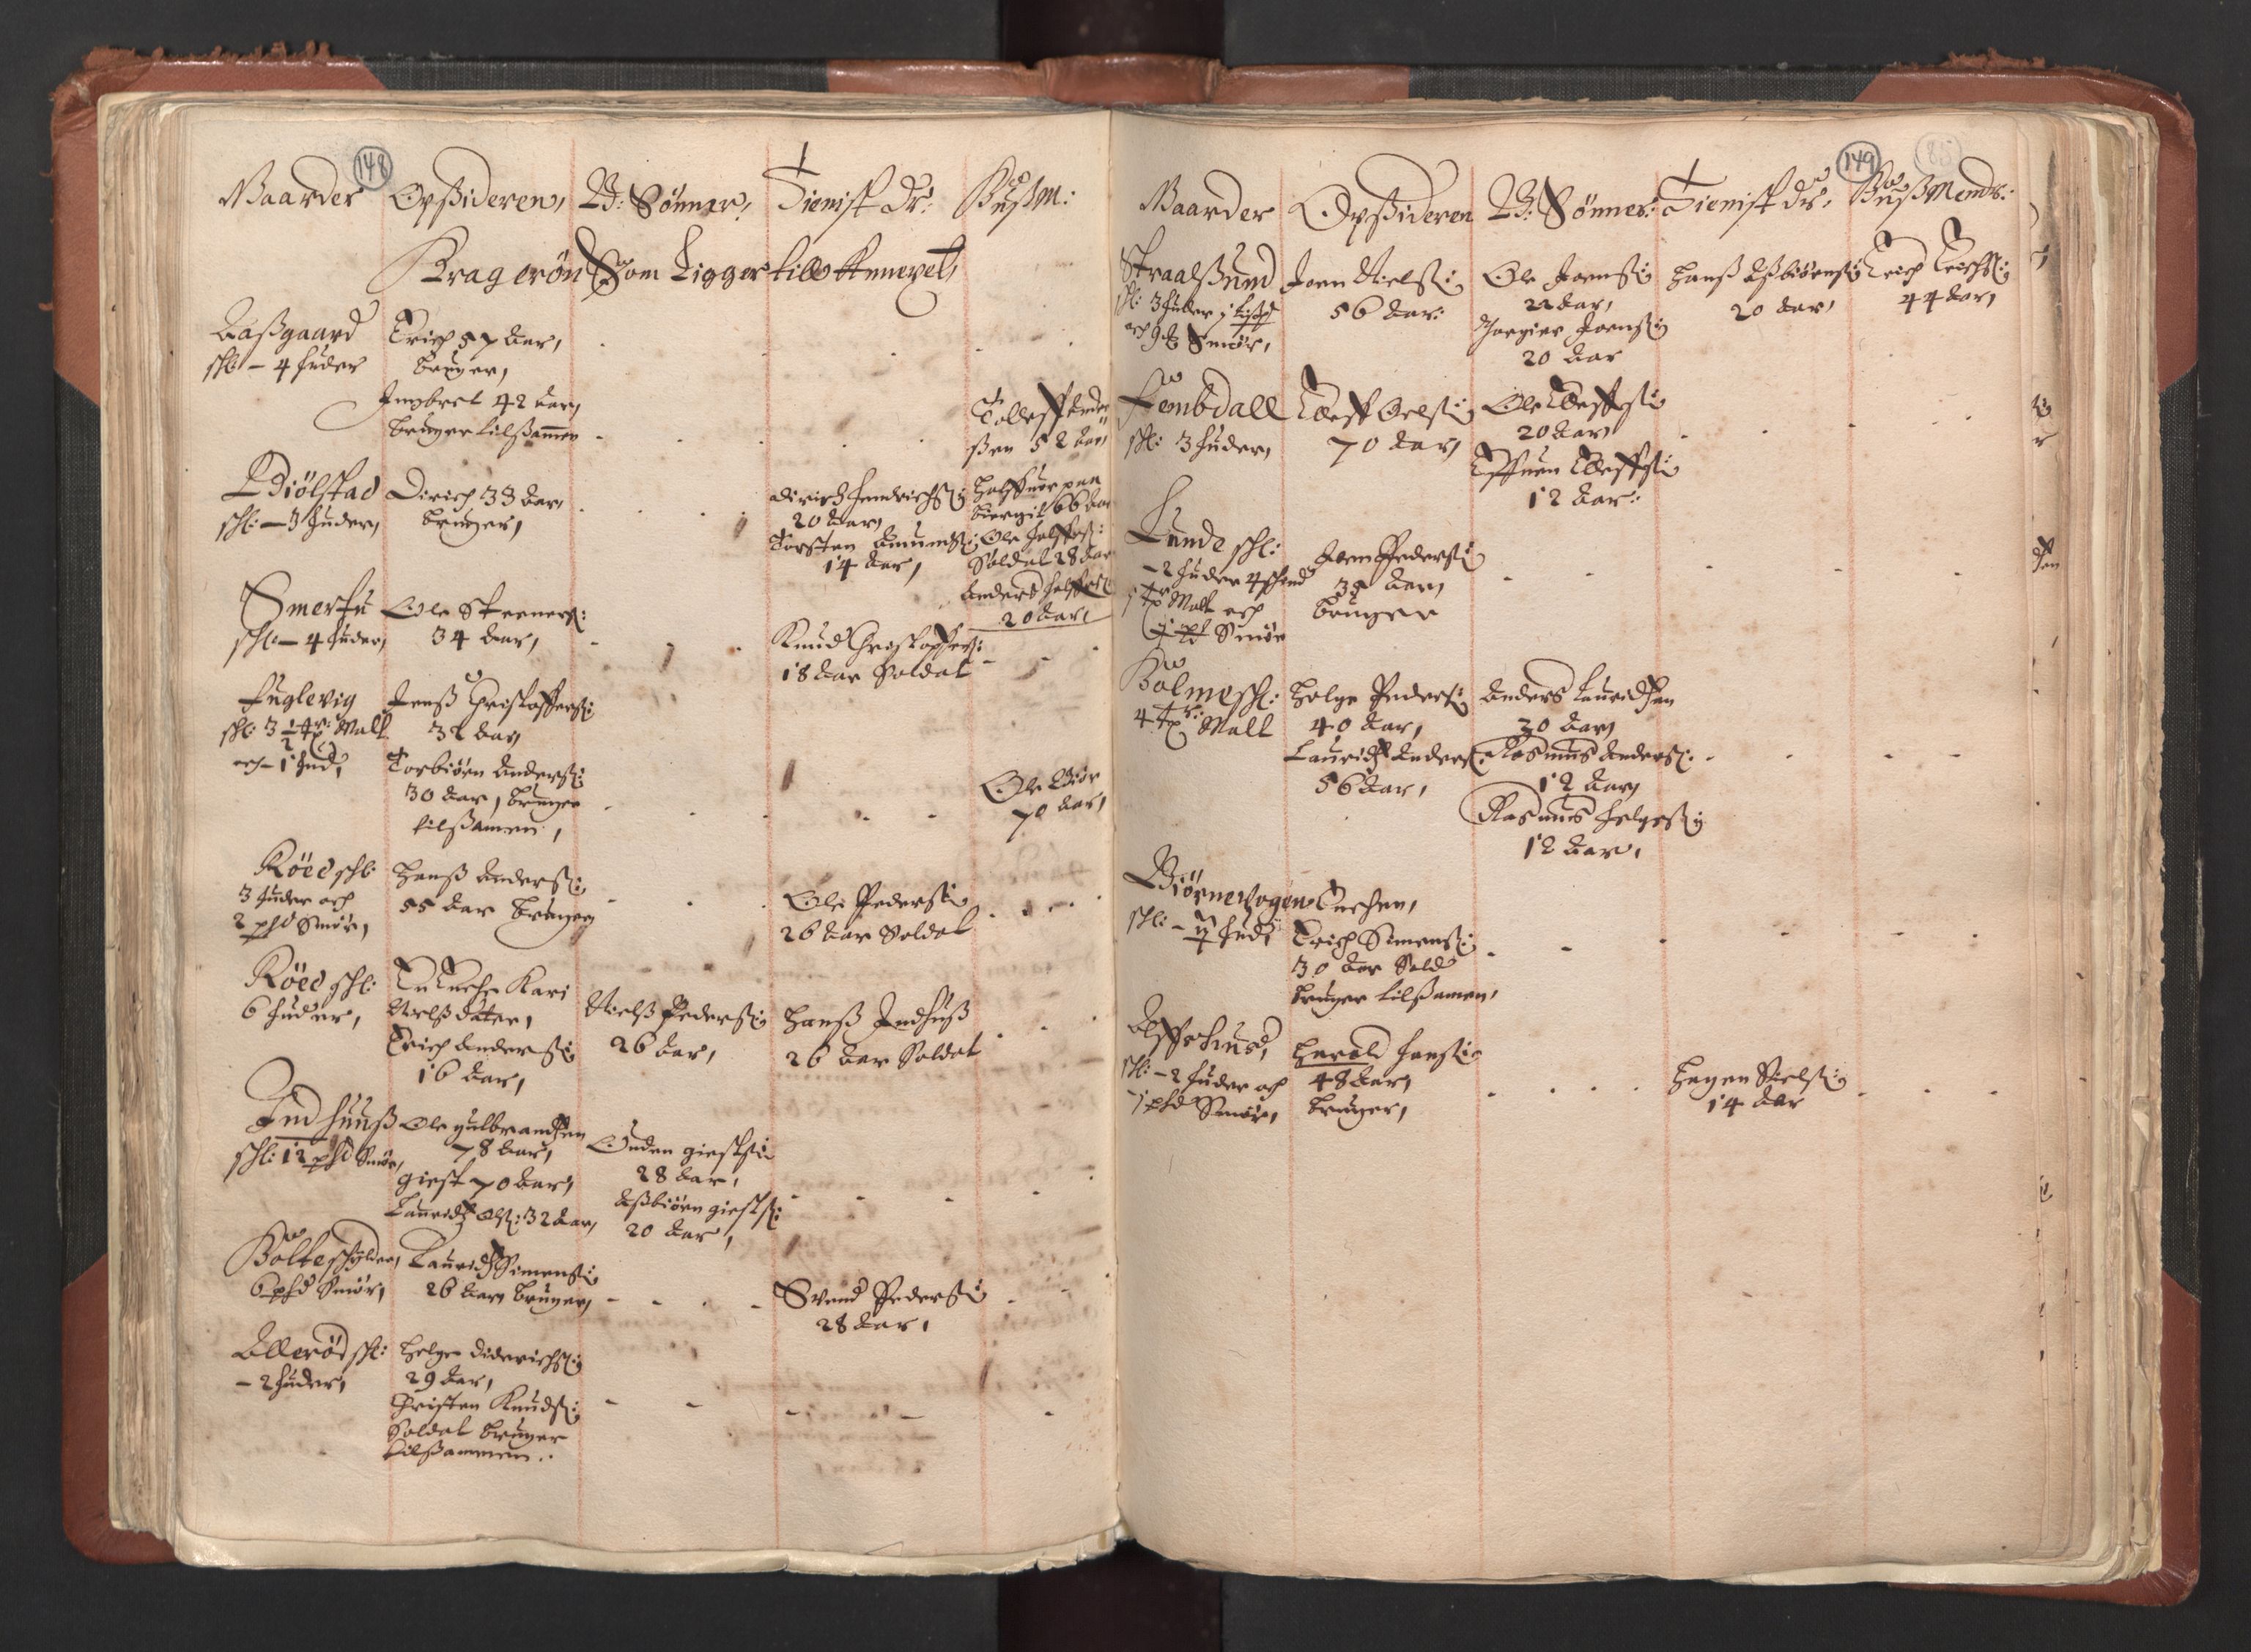 RA, Fogdenes og sorenskrivernes manntall 1664-1666, nr. 1: Fogderier (len og skipreider) i nåværende Østfold fylke, 1664, s. 148-149